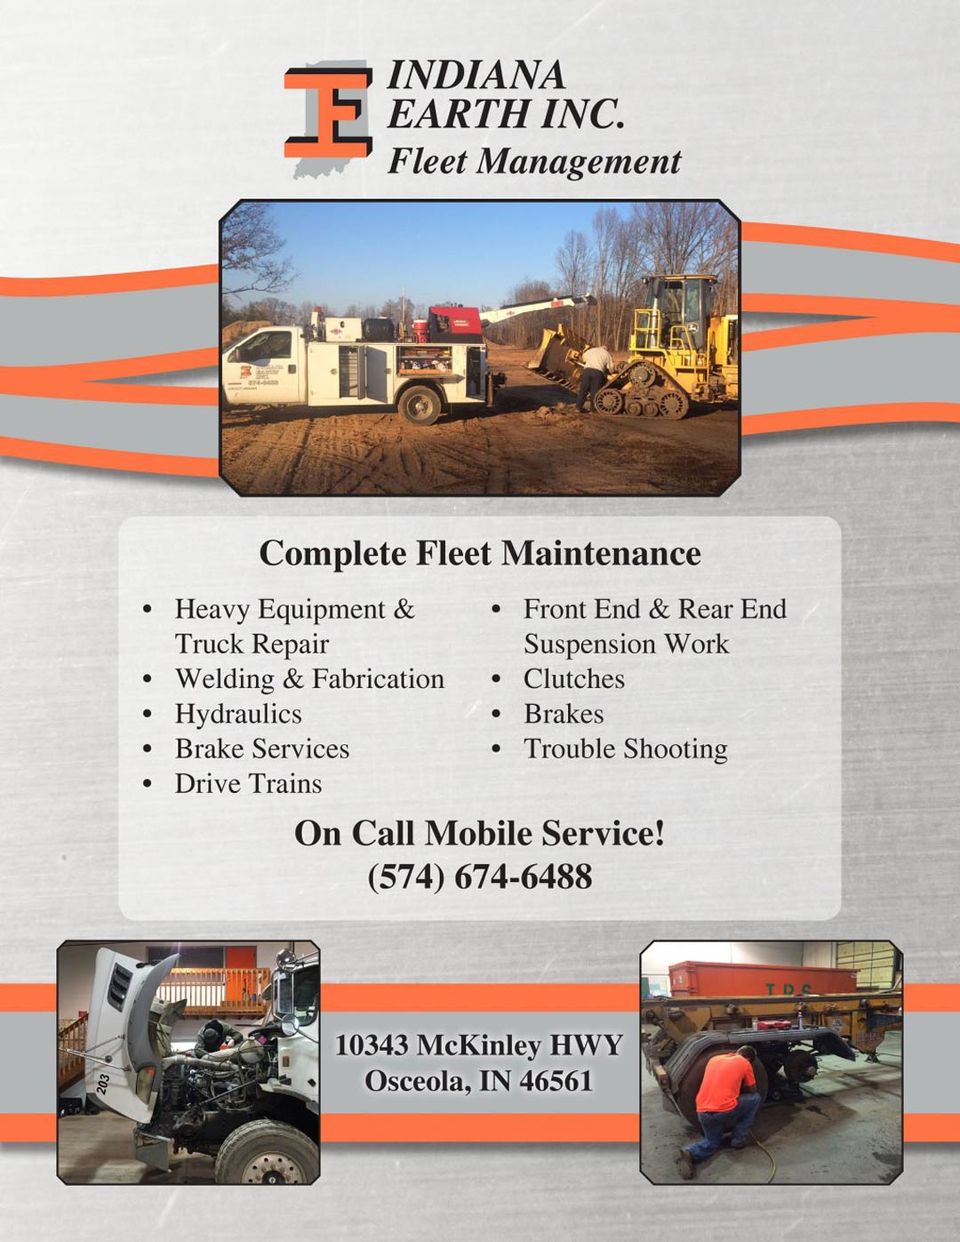 Indian Earth Inc. Fleet Management — Fleet Management in Osceola, IN